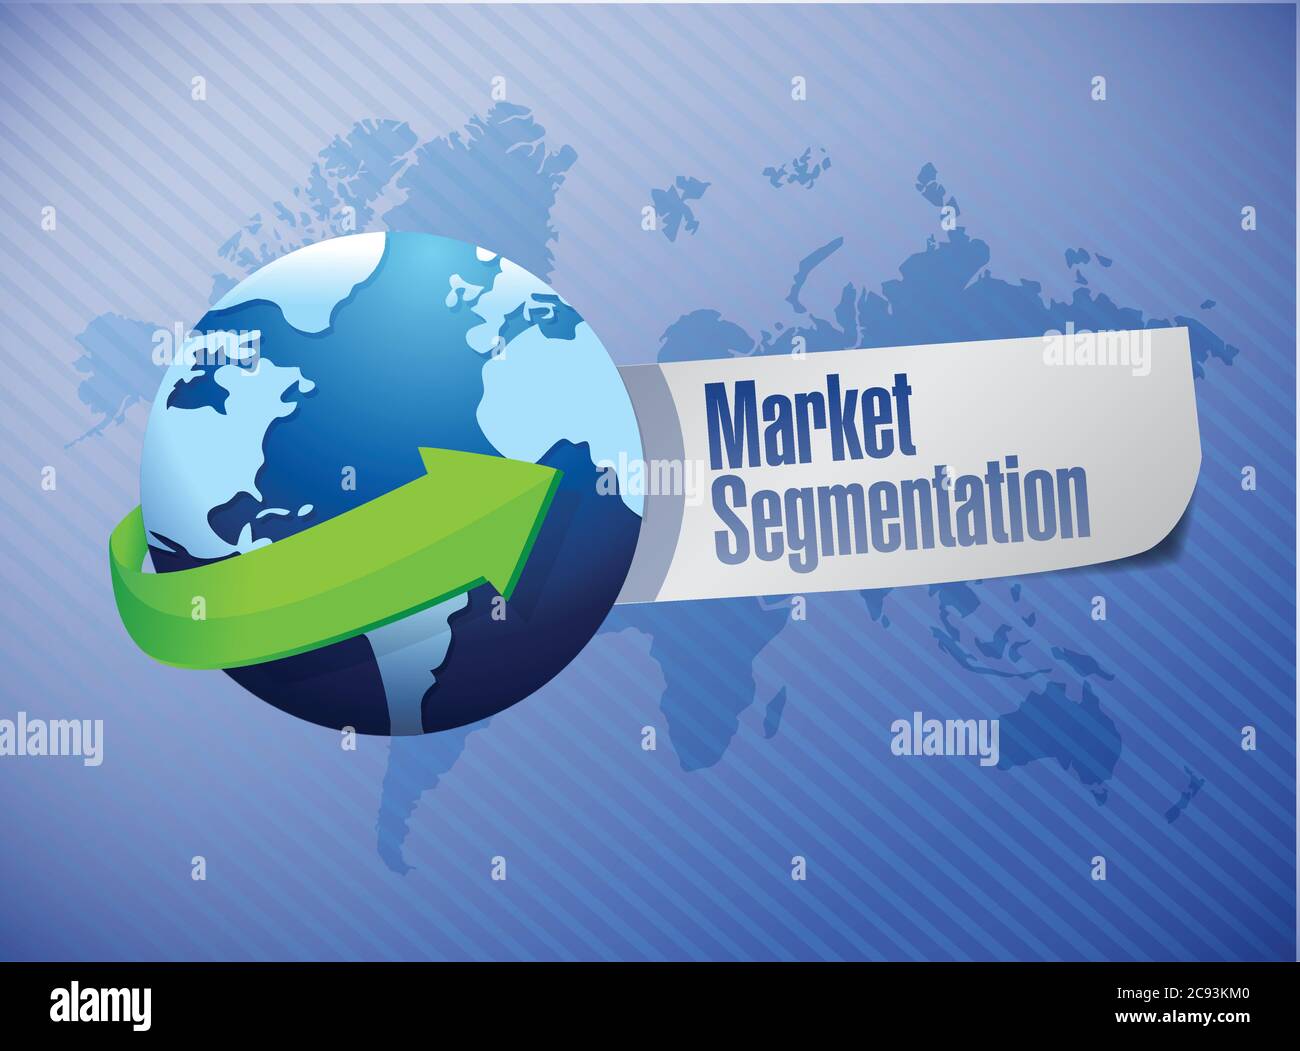 Market segmentation sign illustration design world map background Stock Vector